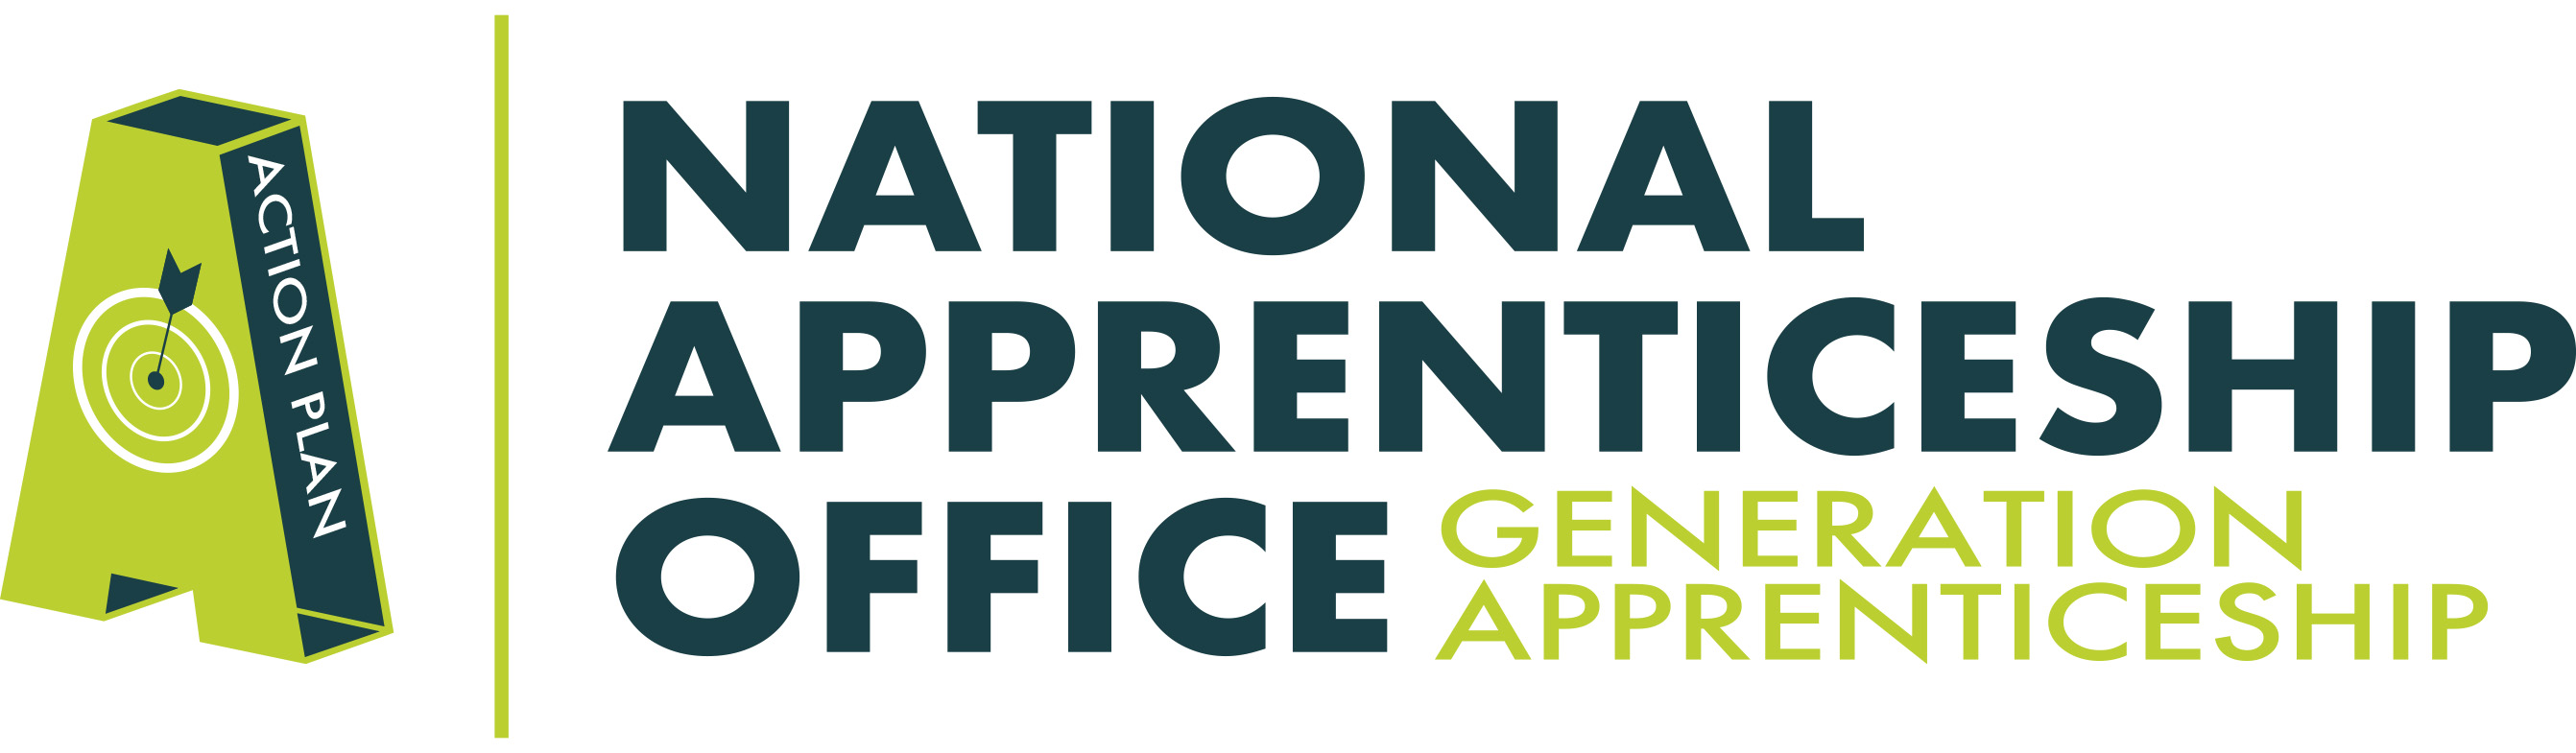 National Apprenticeship Office